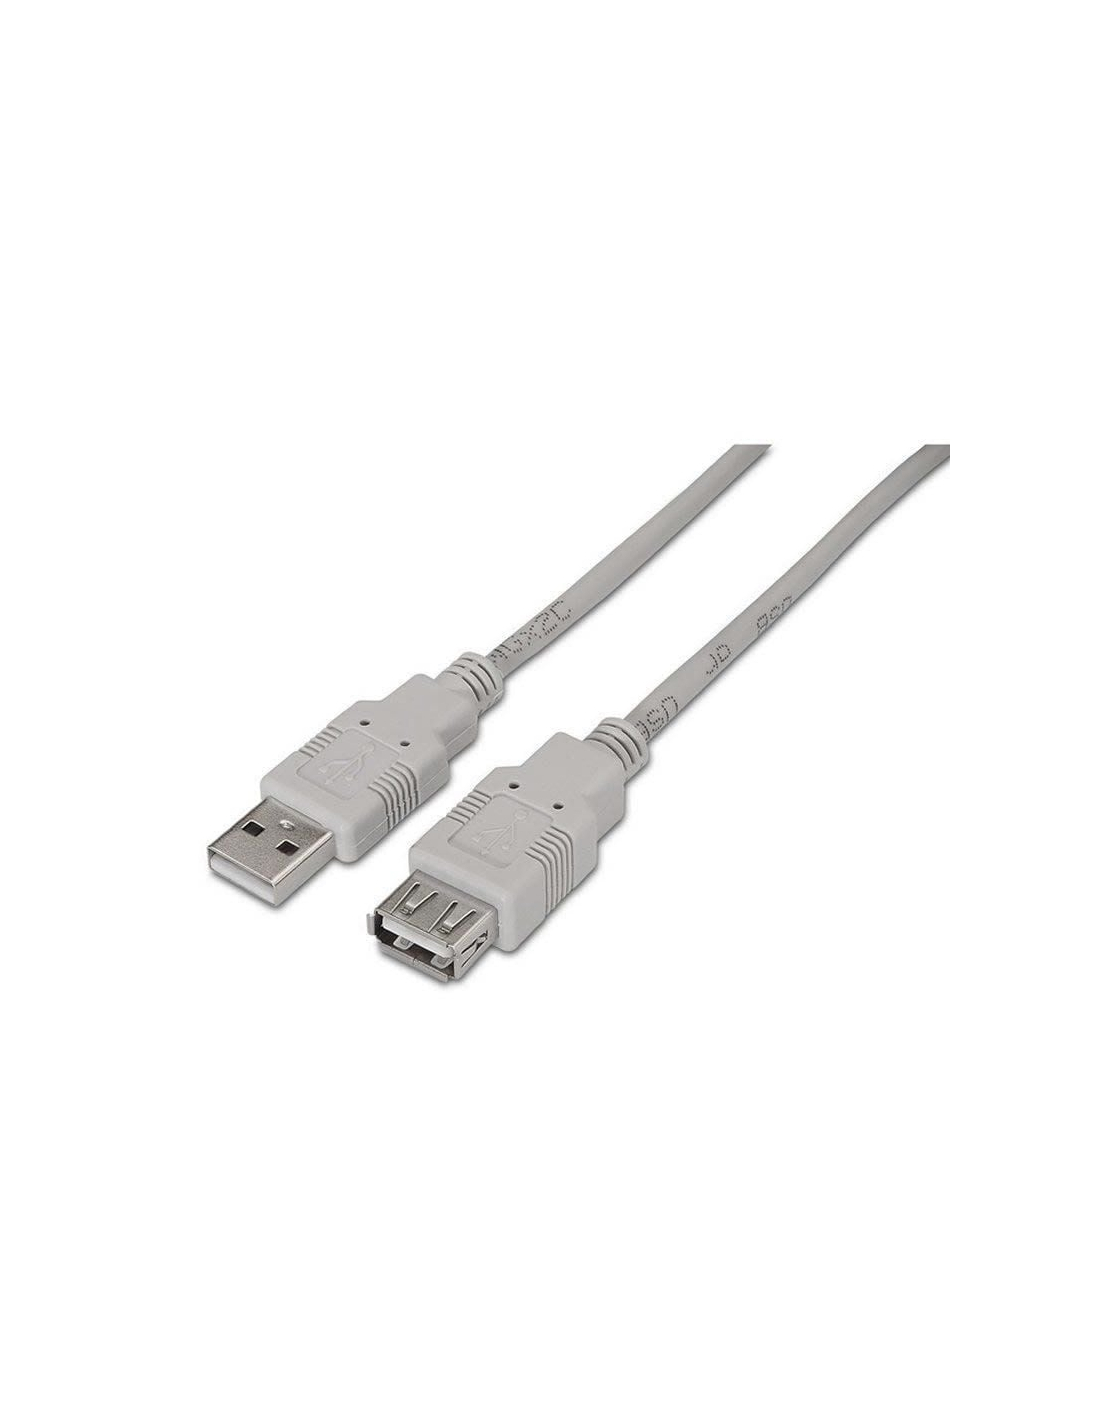 Cable Equip Alargo USB 3.0 Tipo A Macho - Hembra 3M